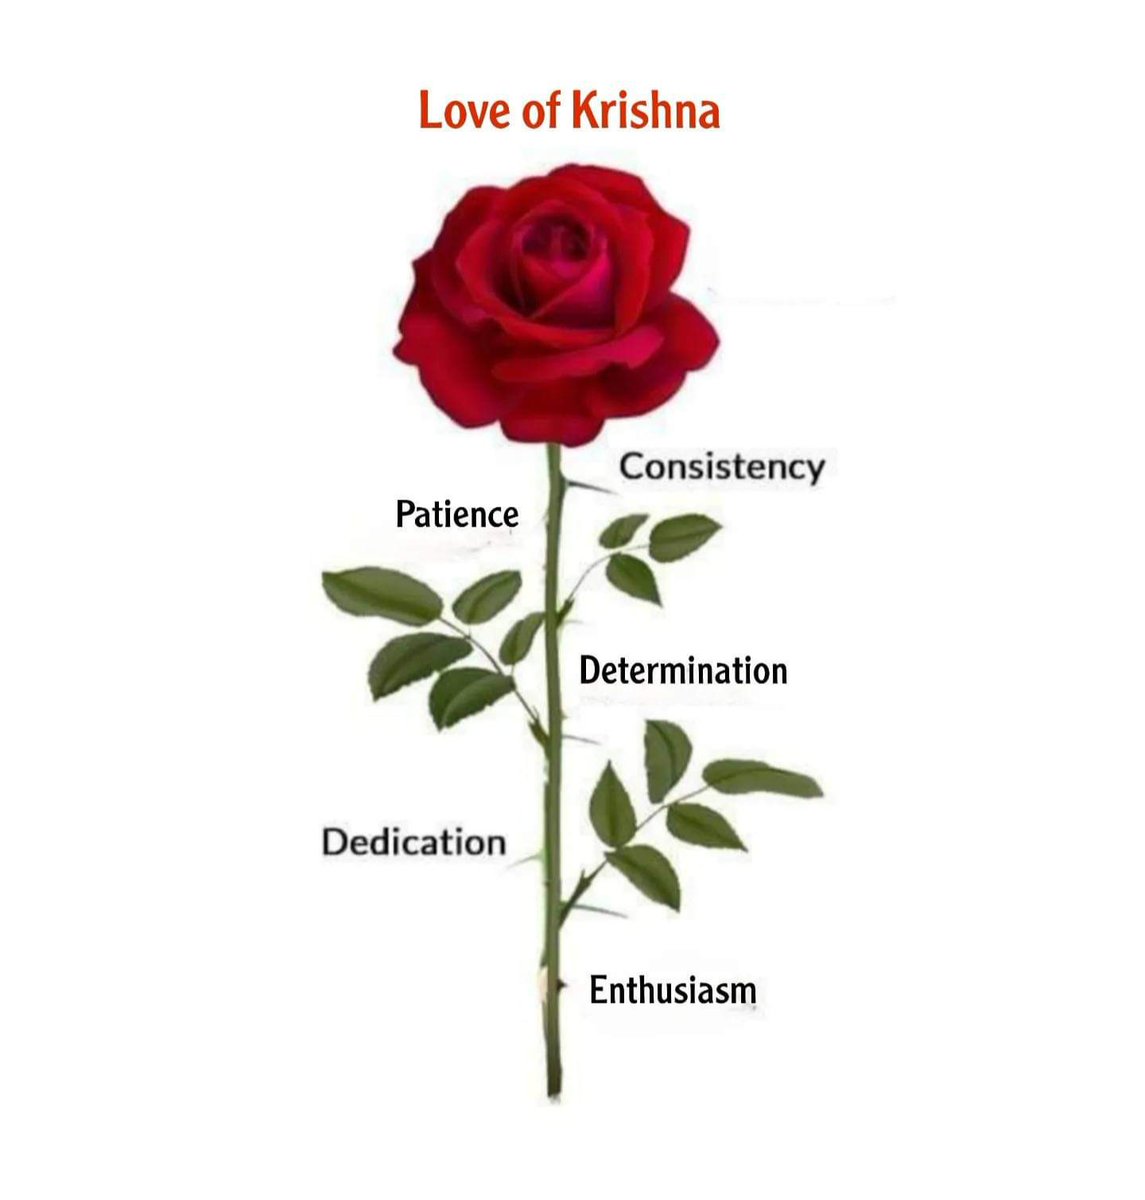 Hare Krishna 🙏
#RoseDay